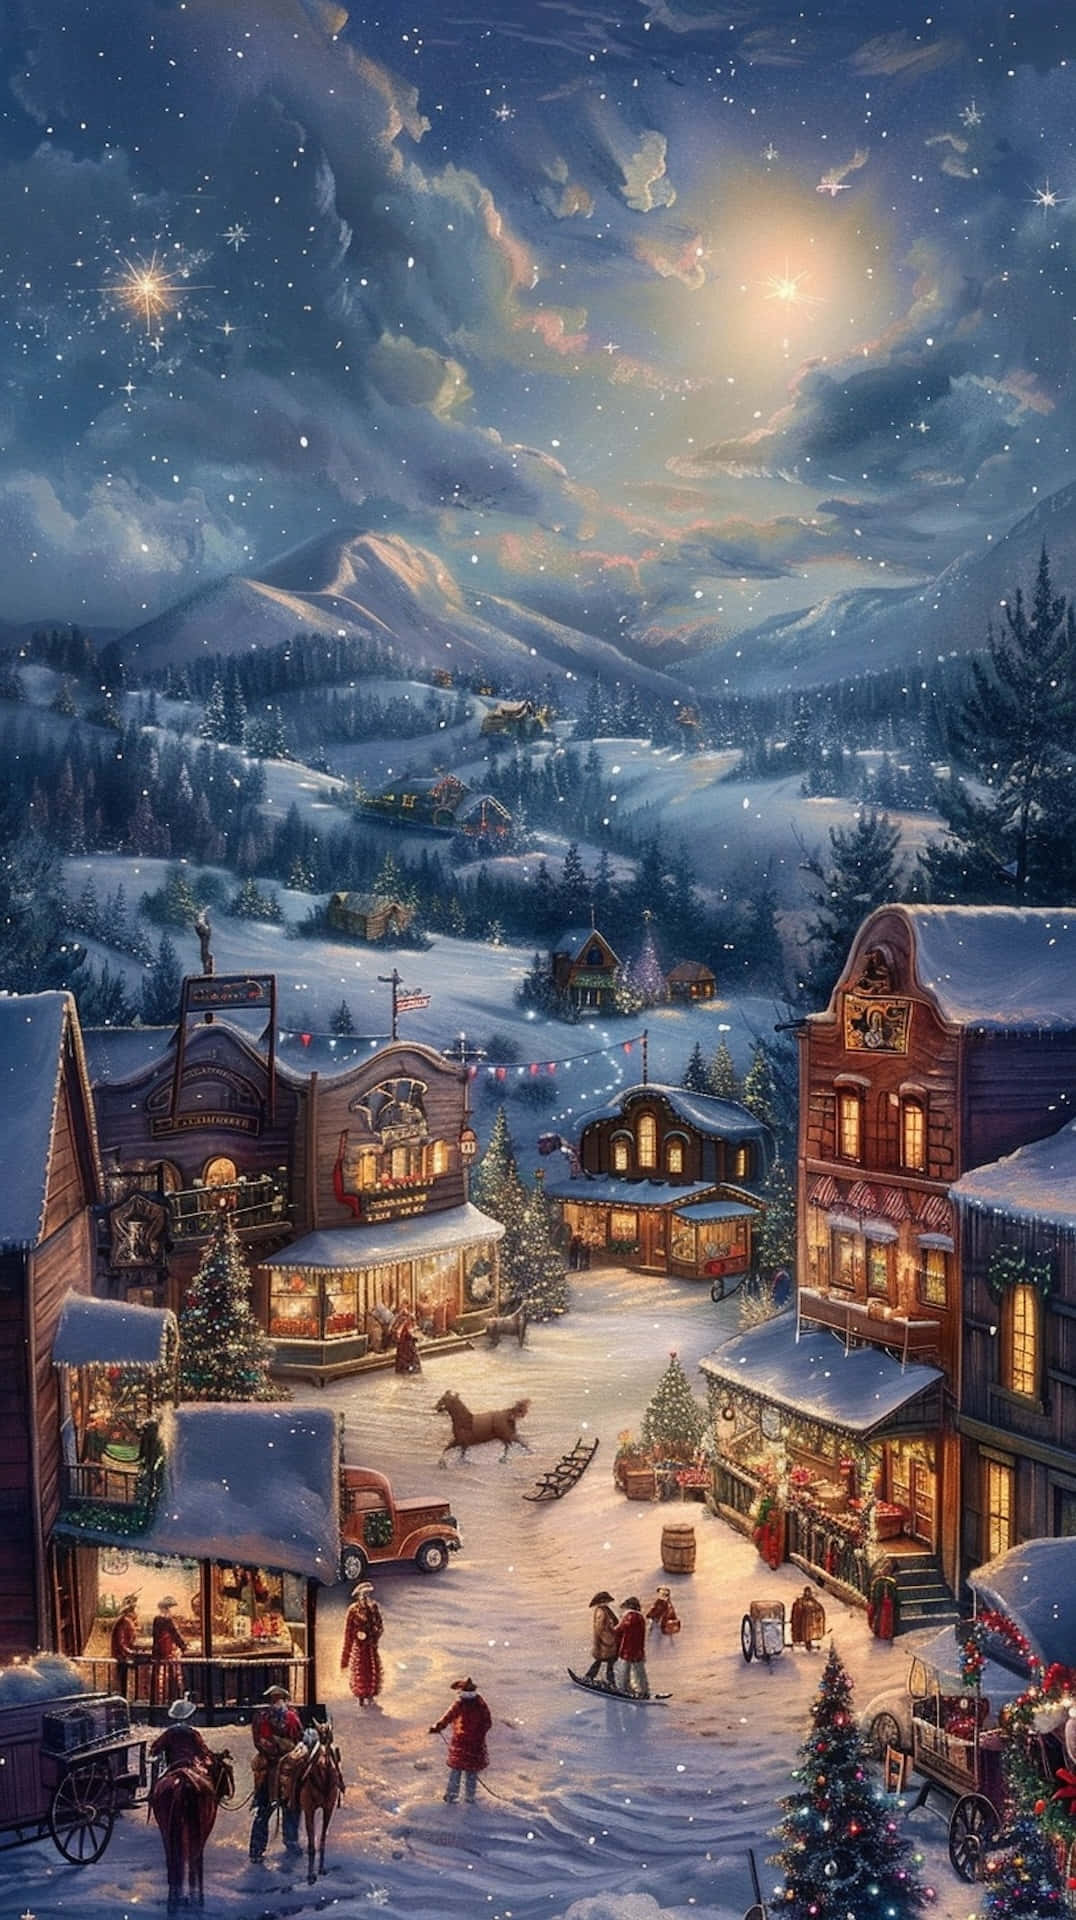 Enchanted Christmas Village Night Wallpaper